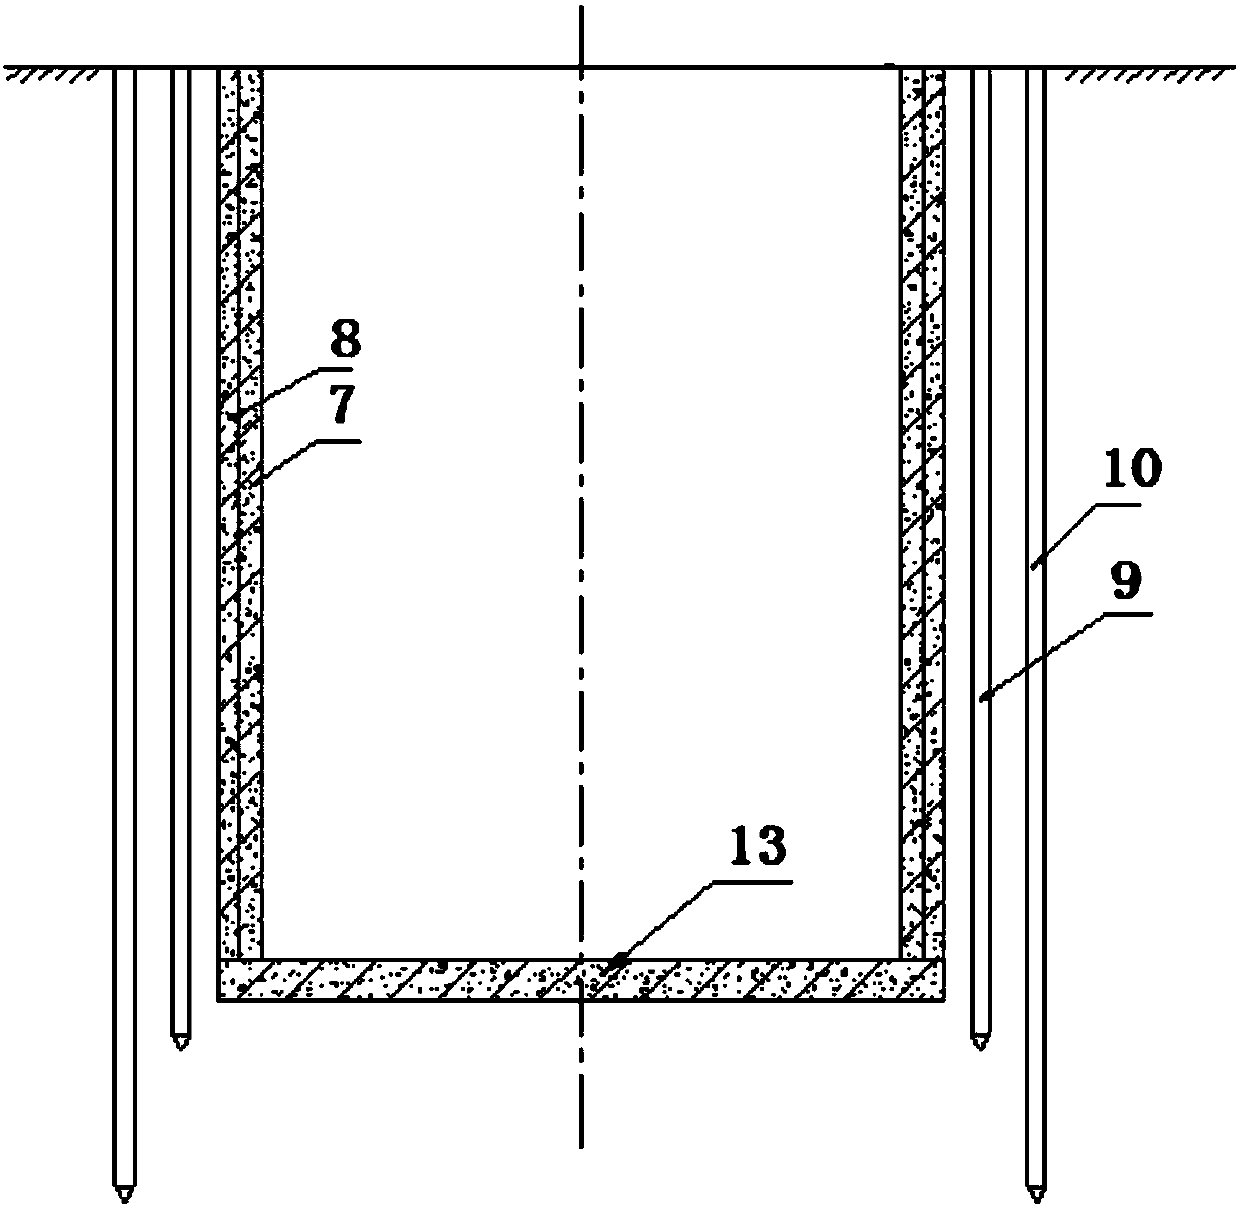 Freeze construction method for wellbore type underground parking garage